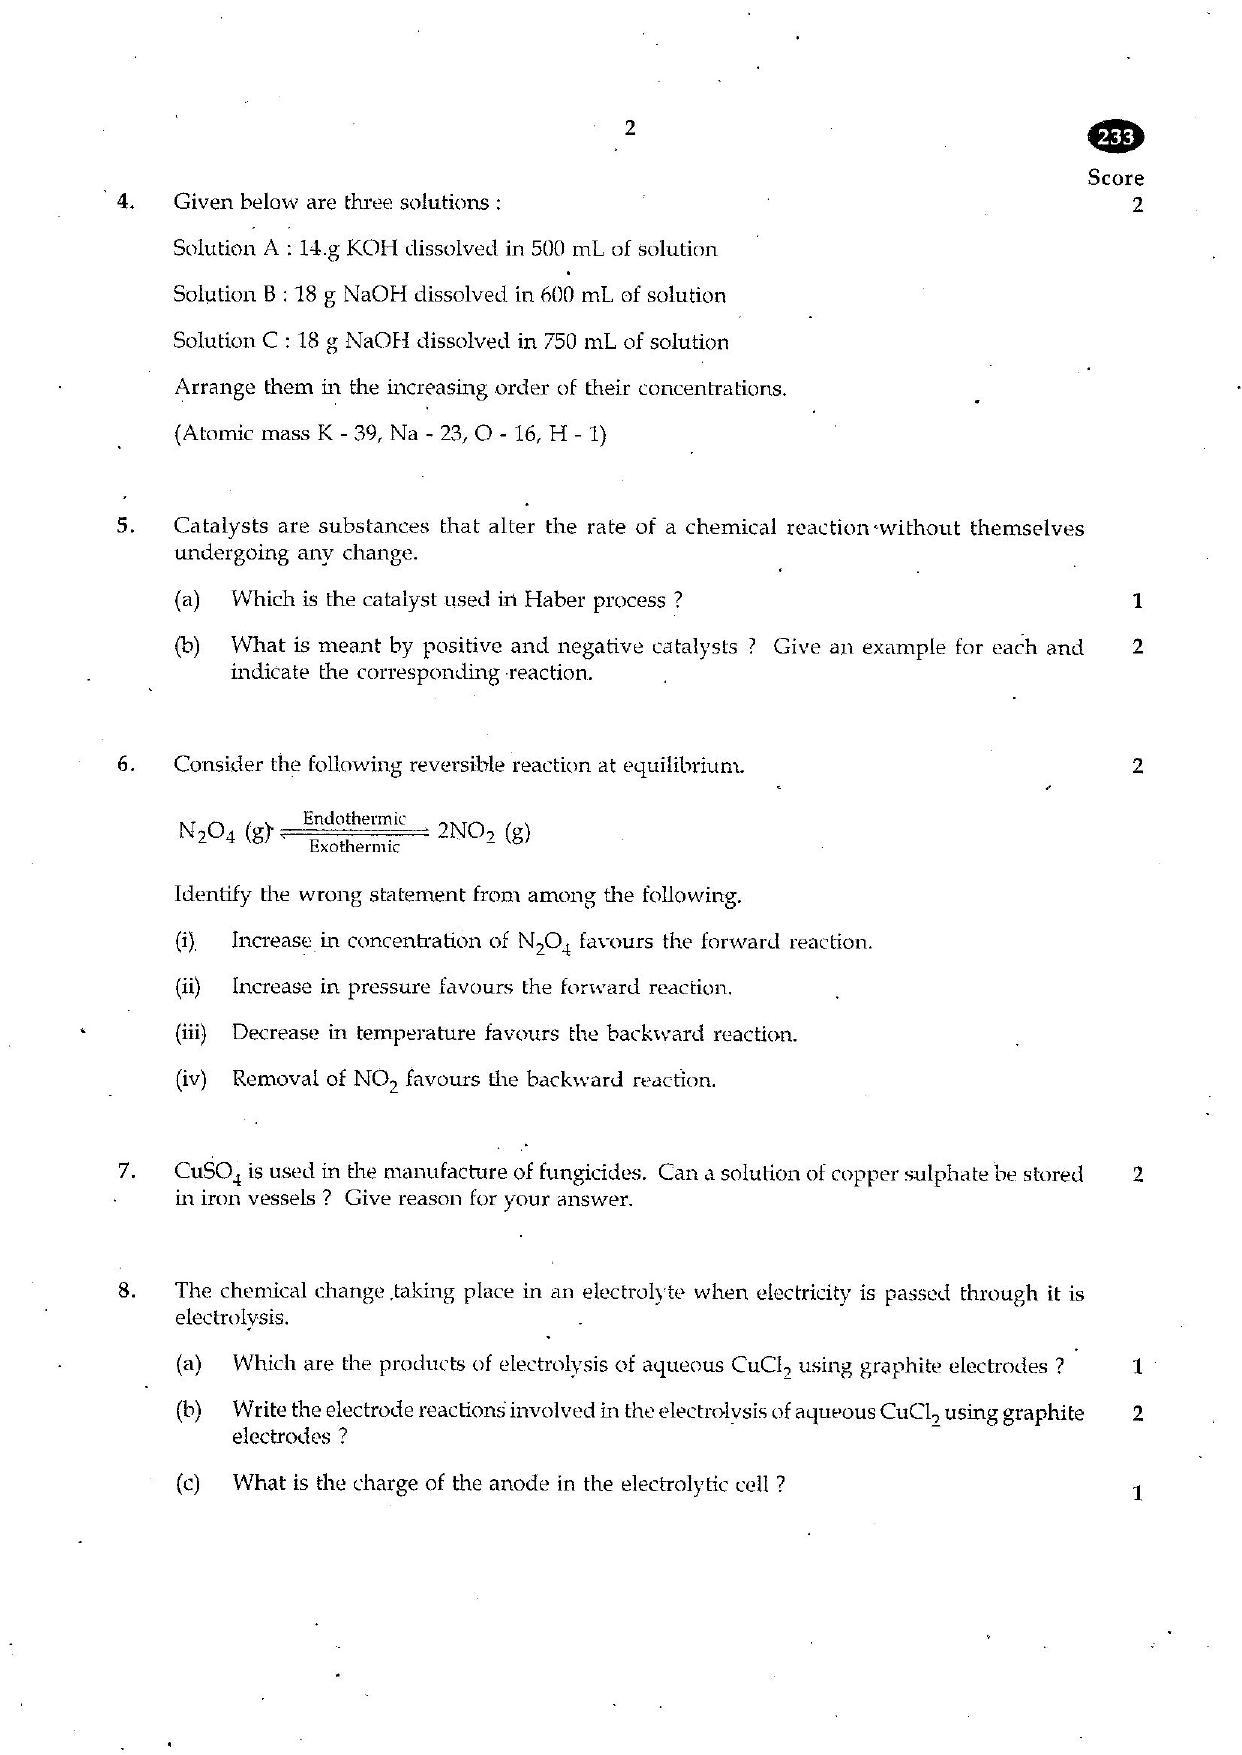 Kerala SSLC 2017 Chemistry Question paper (EM) (Model) - Page 2